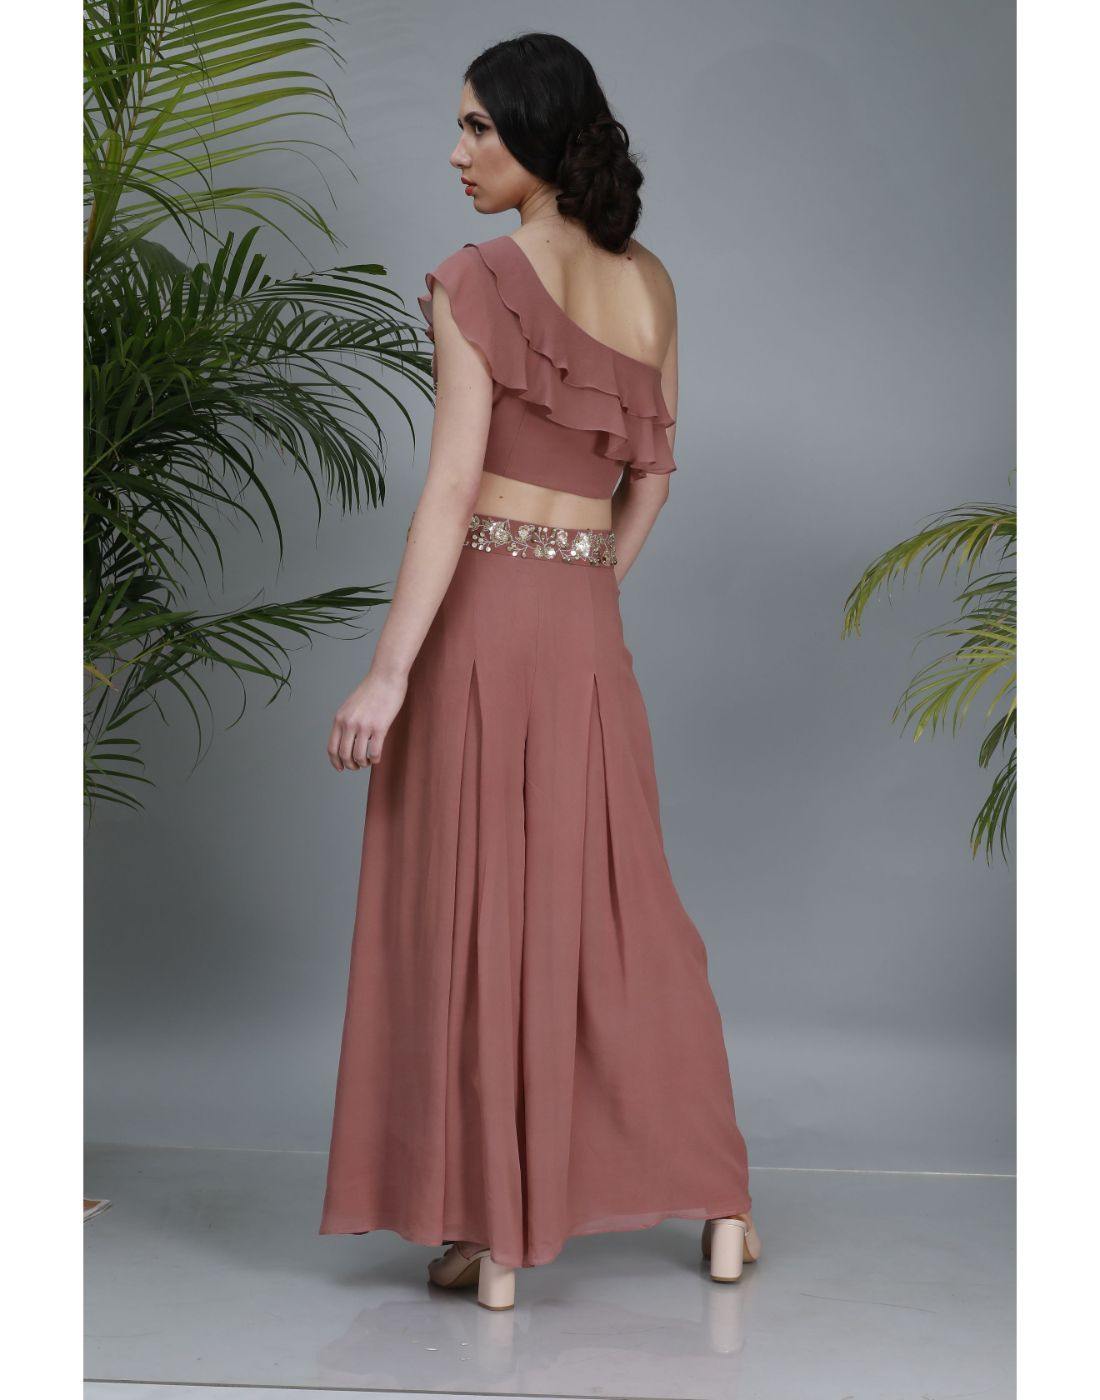 Shop Online For Pink Crop Top Jacket Dress – SNAZZYHUNT